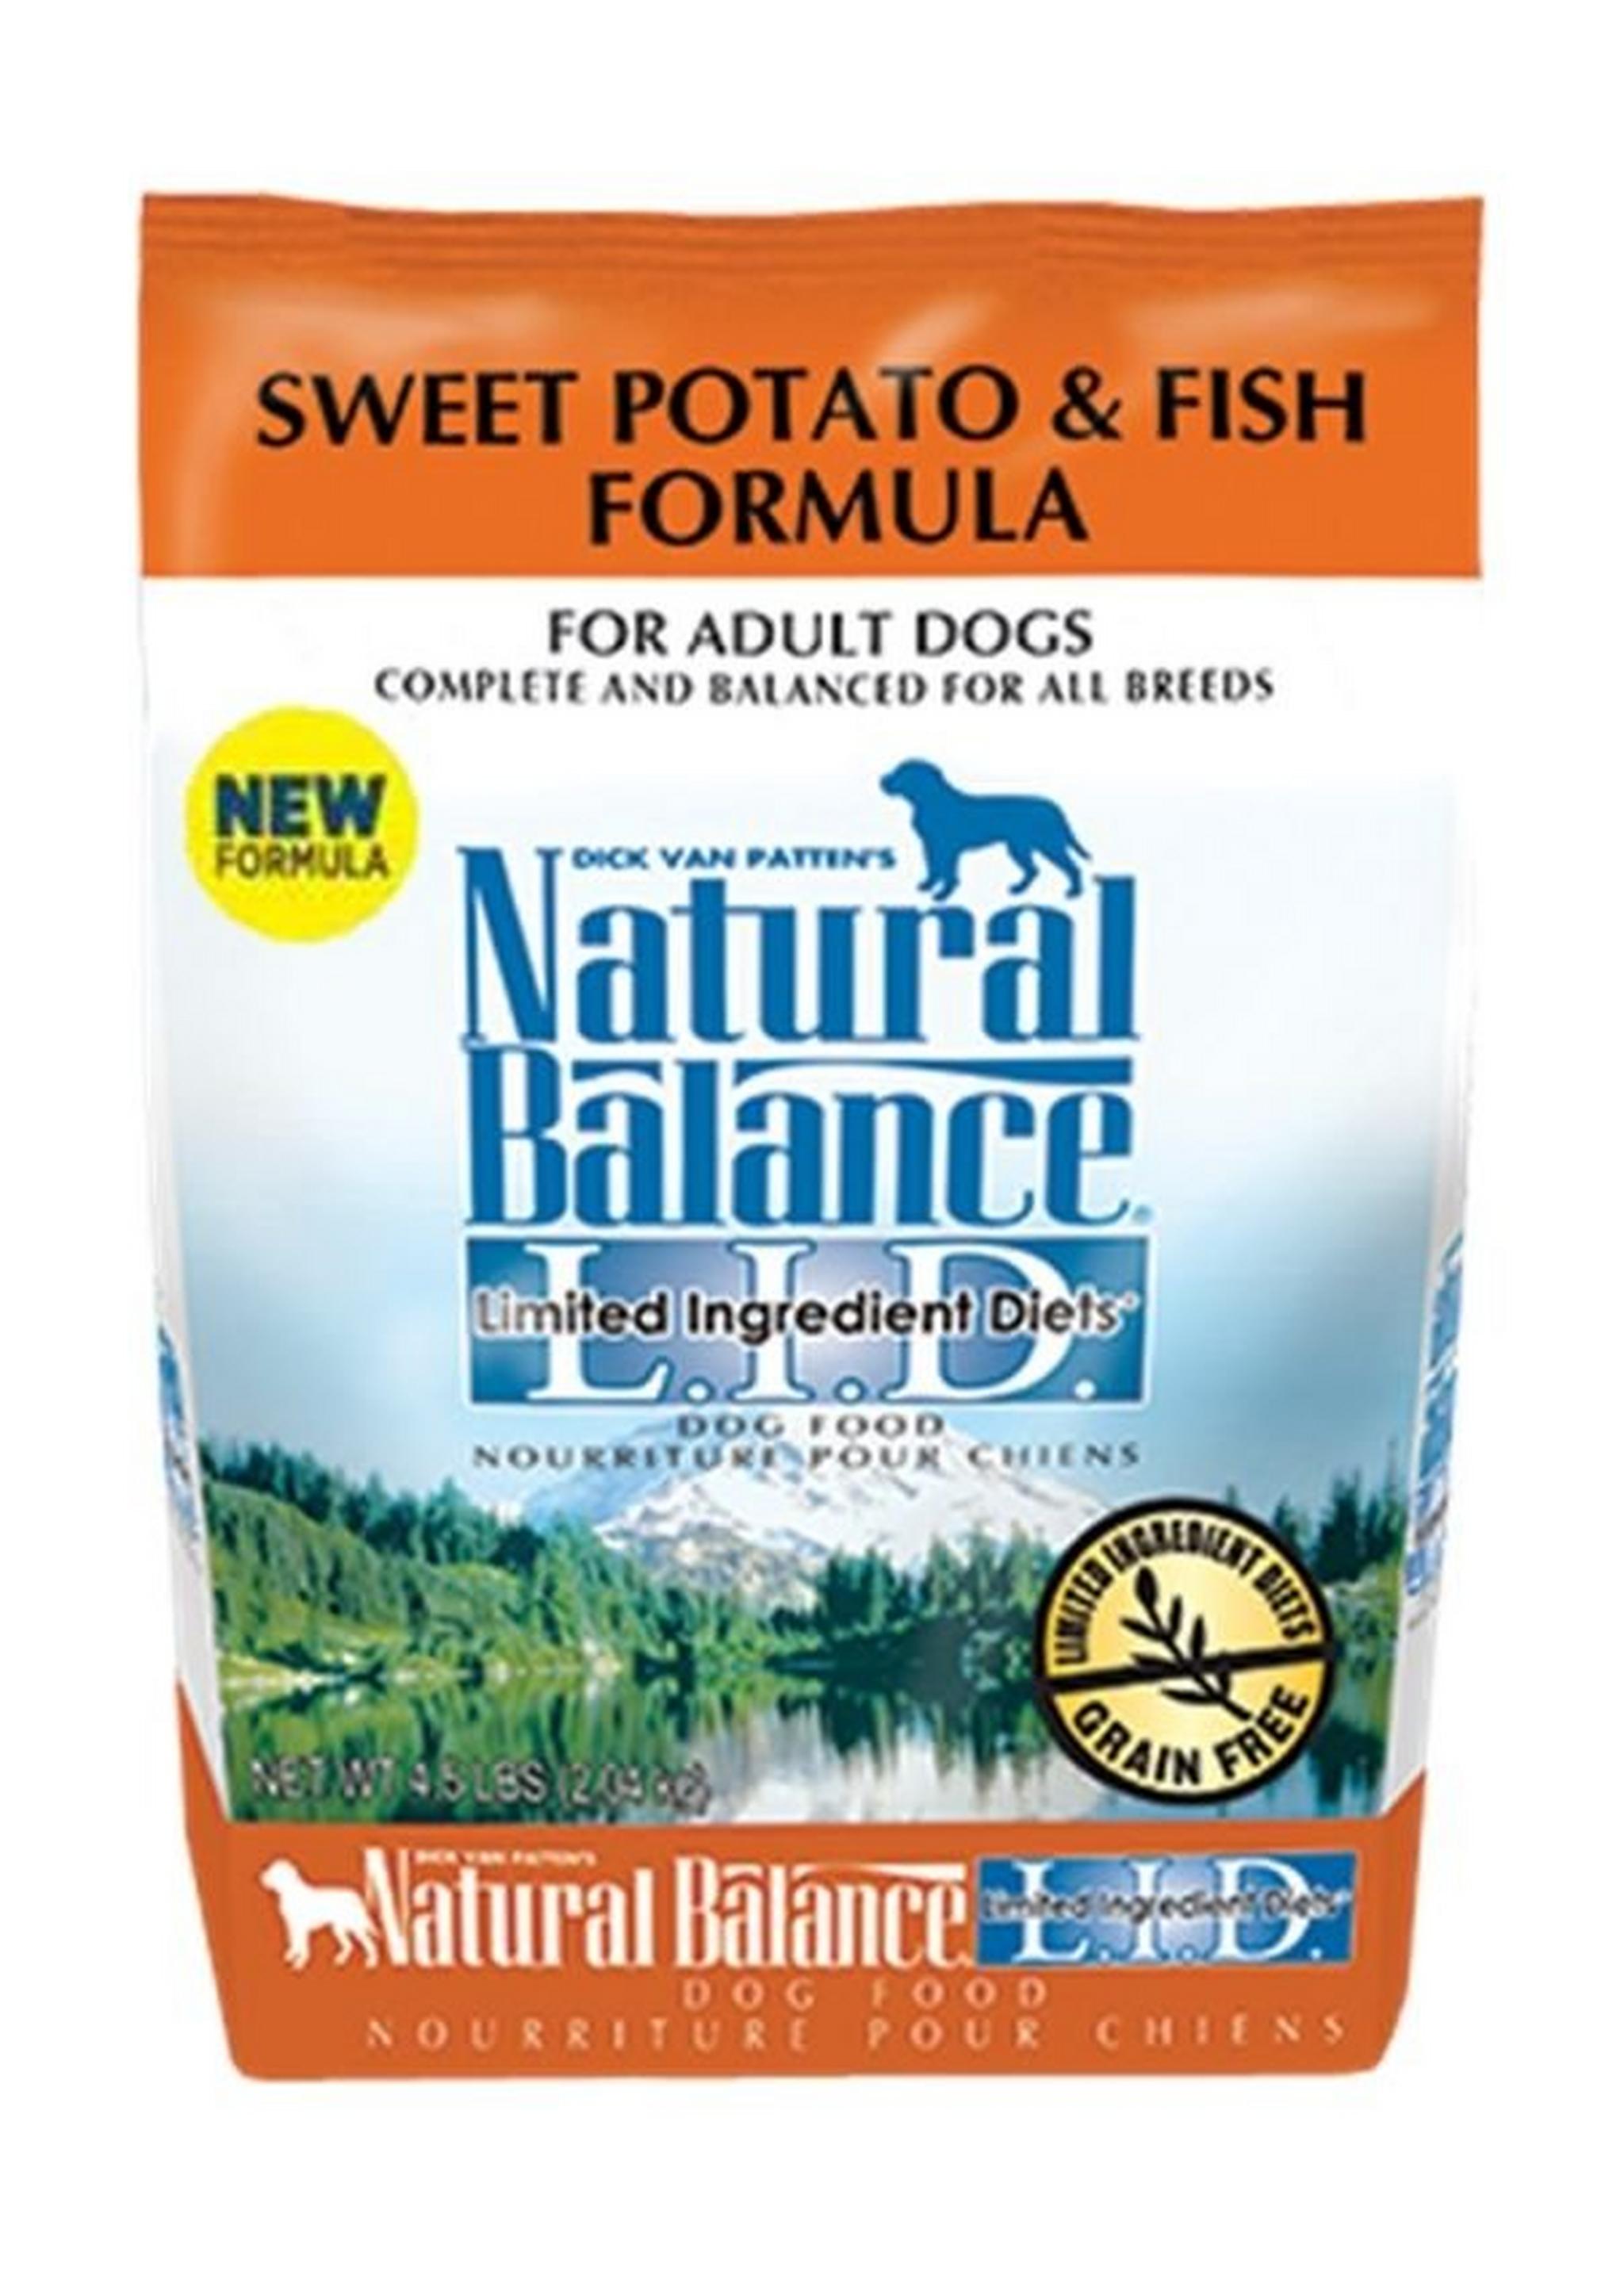 Natural Balance Sweet Potato & Fish Formula For Adult Dogs 4.5 LBS